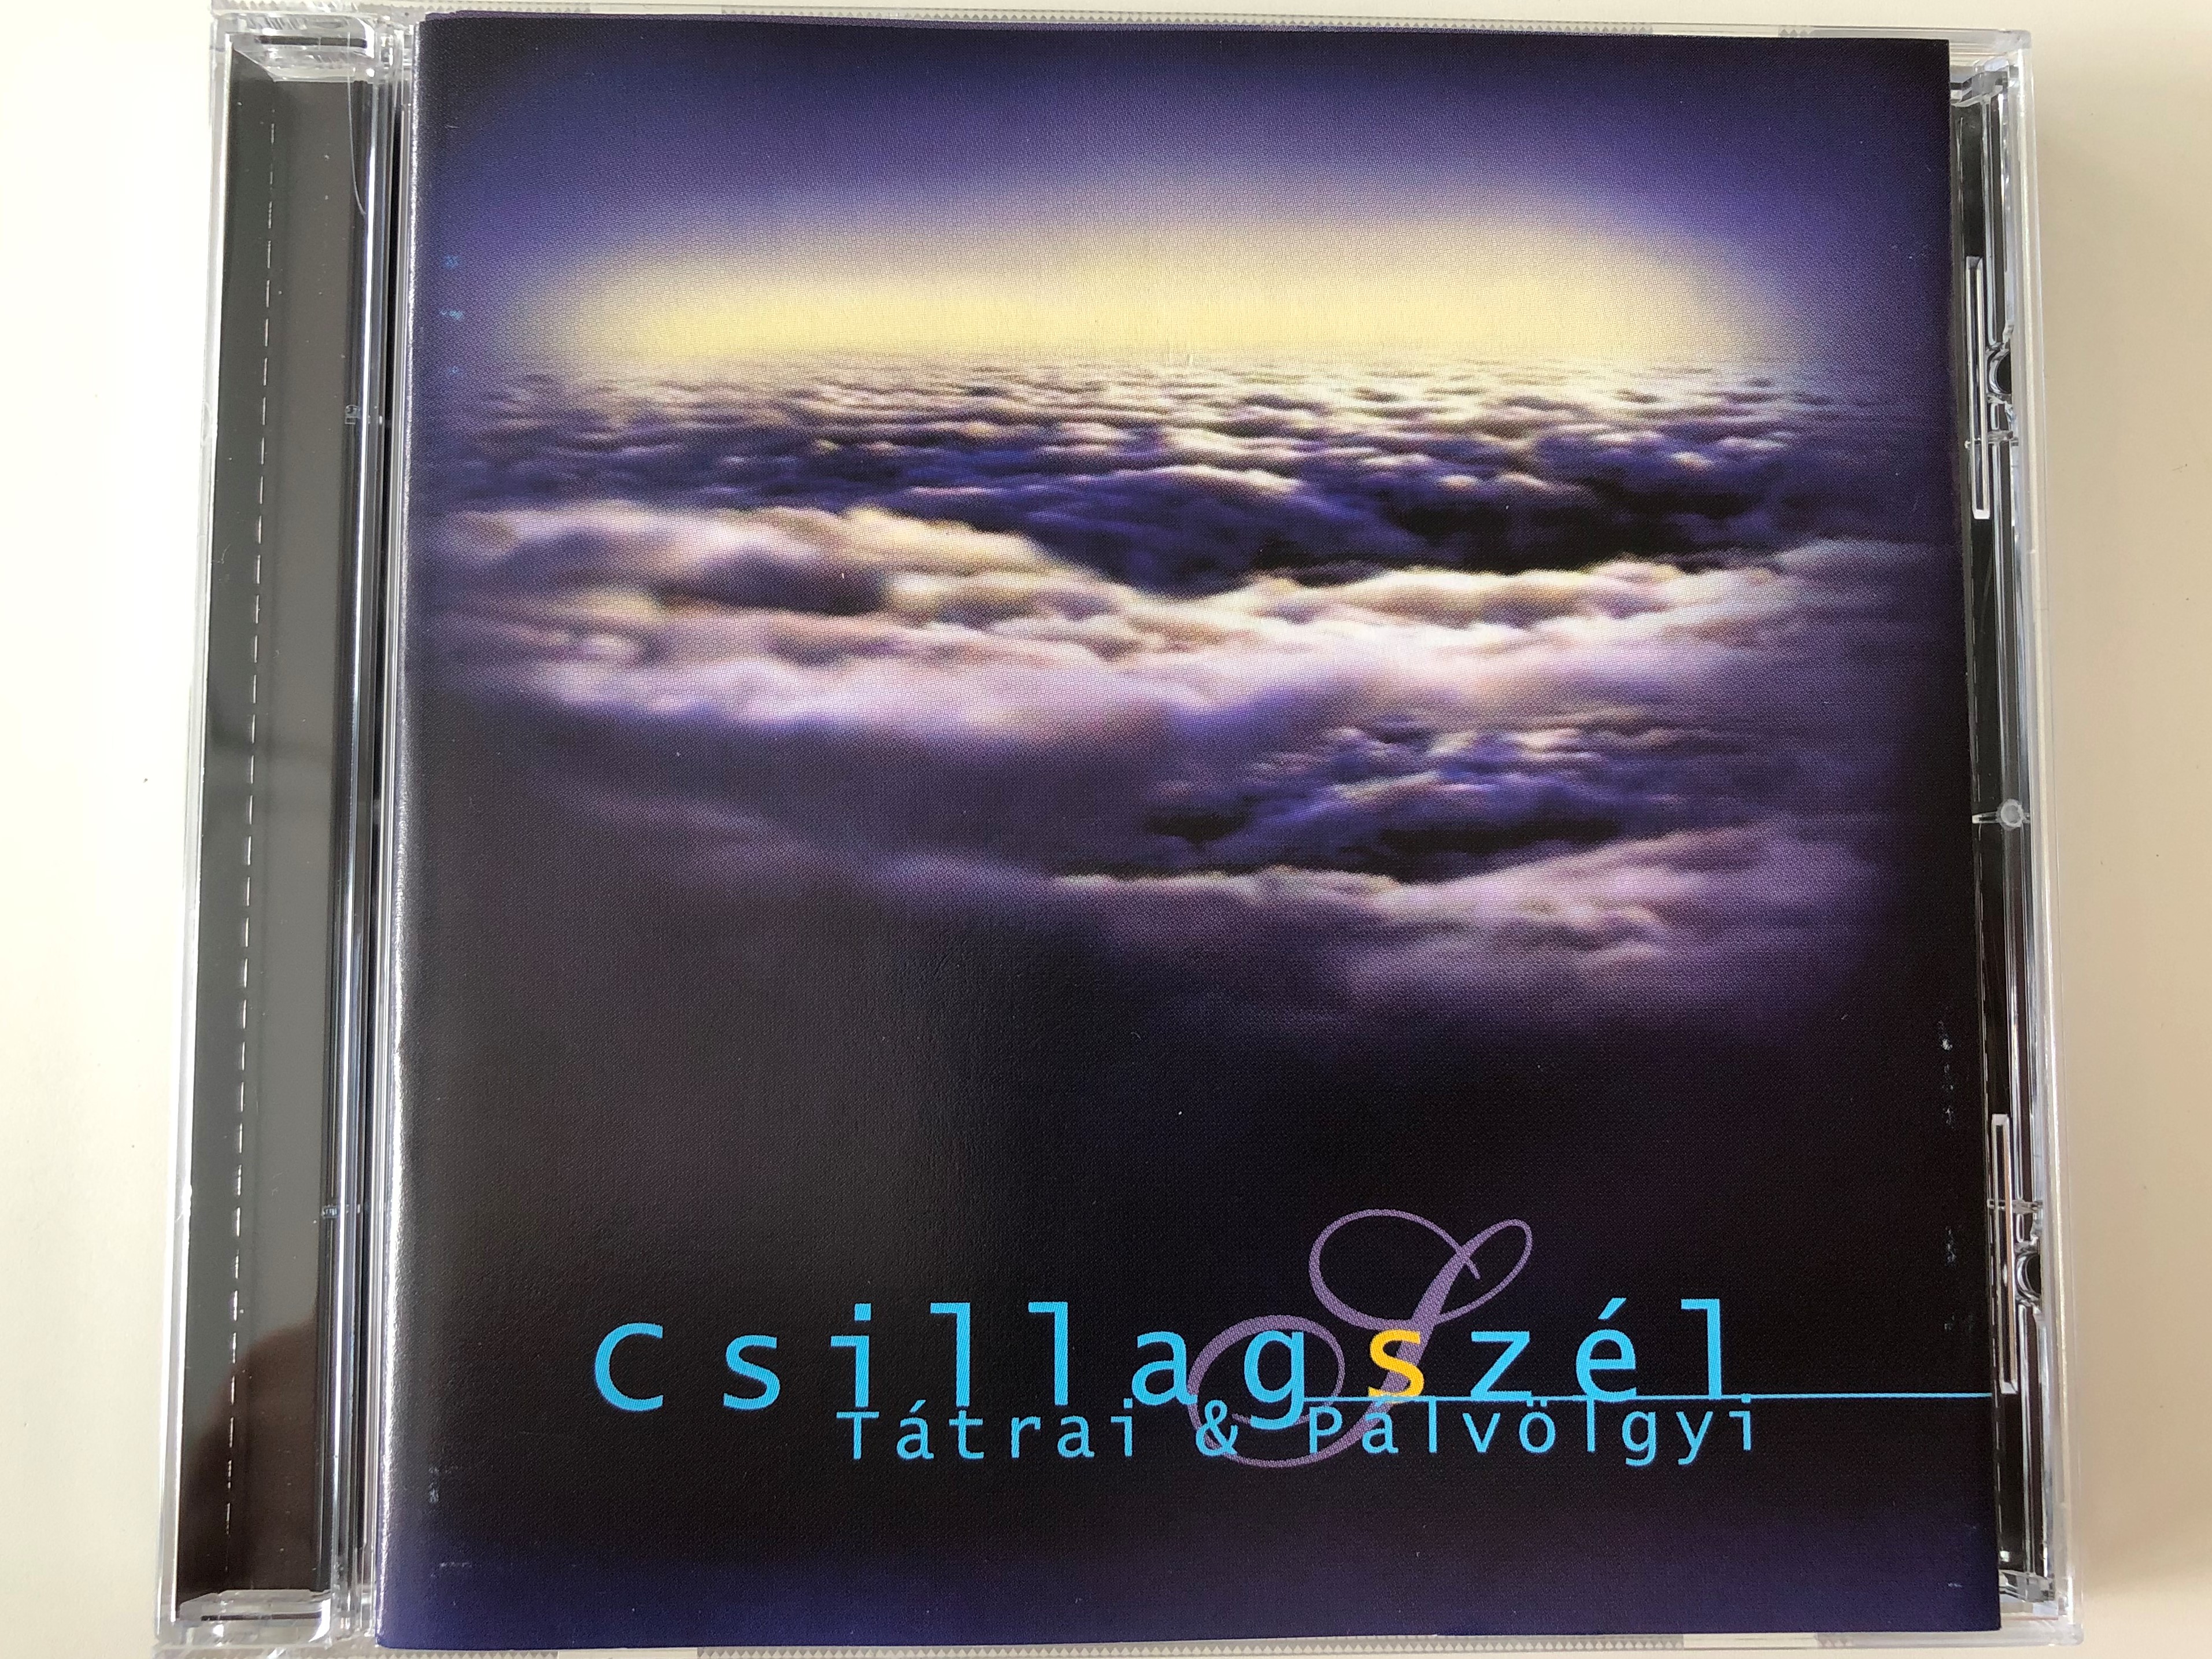 csillagsz-l-t-trai-p-lv-lgyi-columbia-audio-cd-1999-col-496044-2-1-.jpg